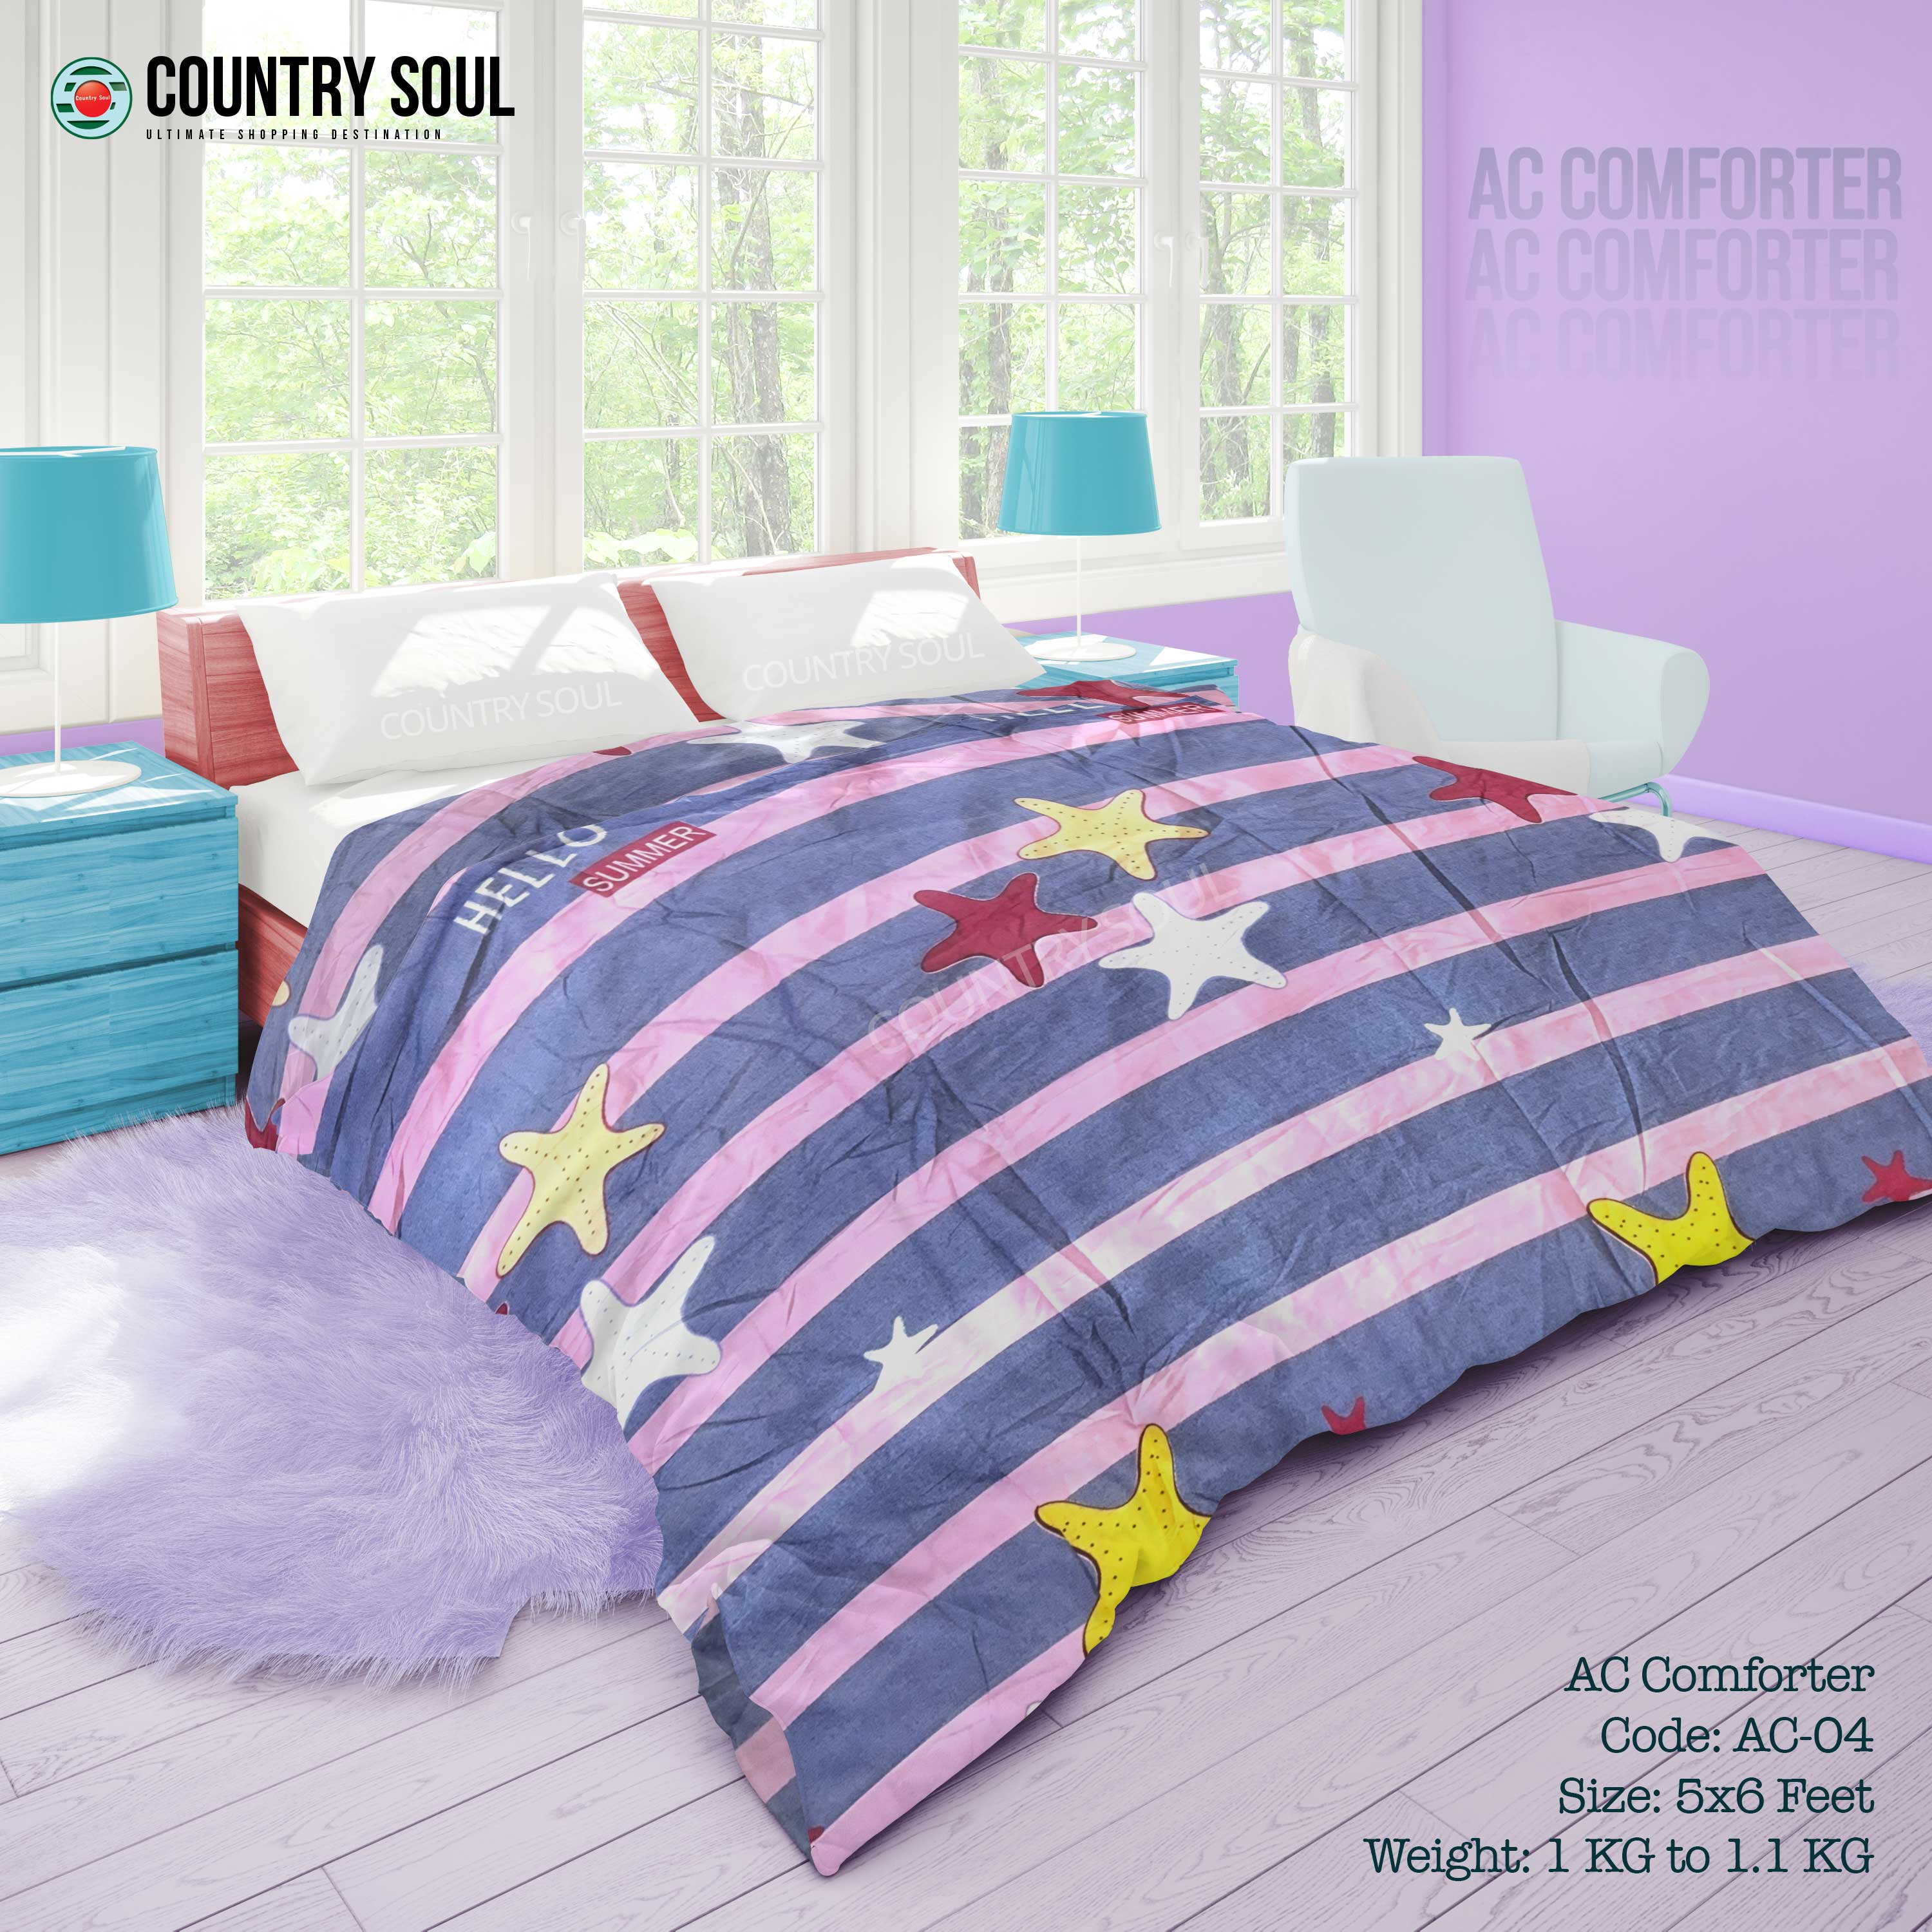 Export Quality Ac Comforter